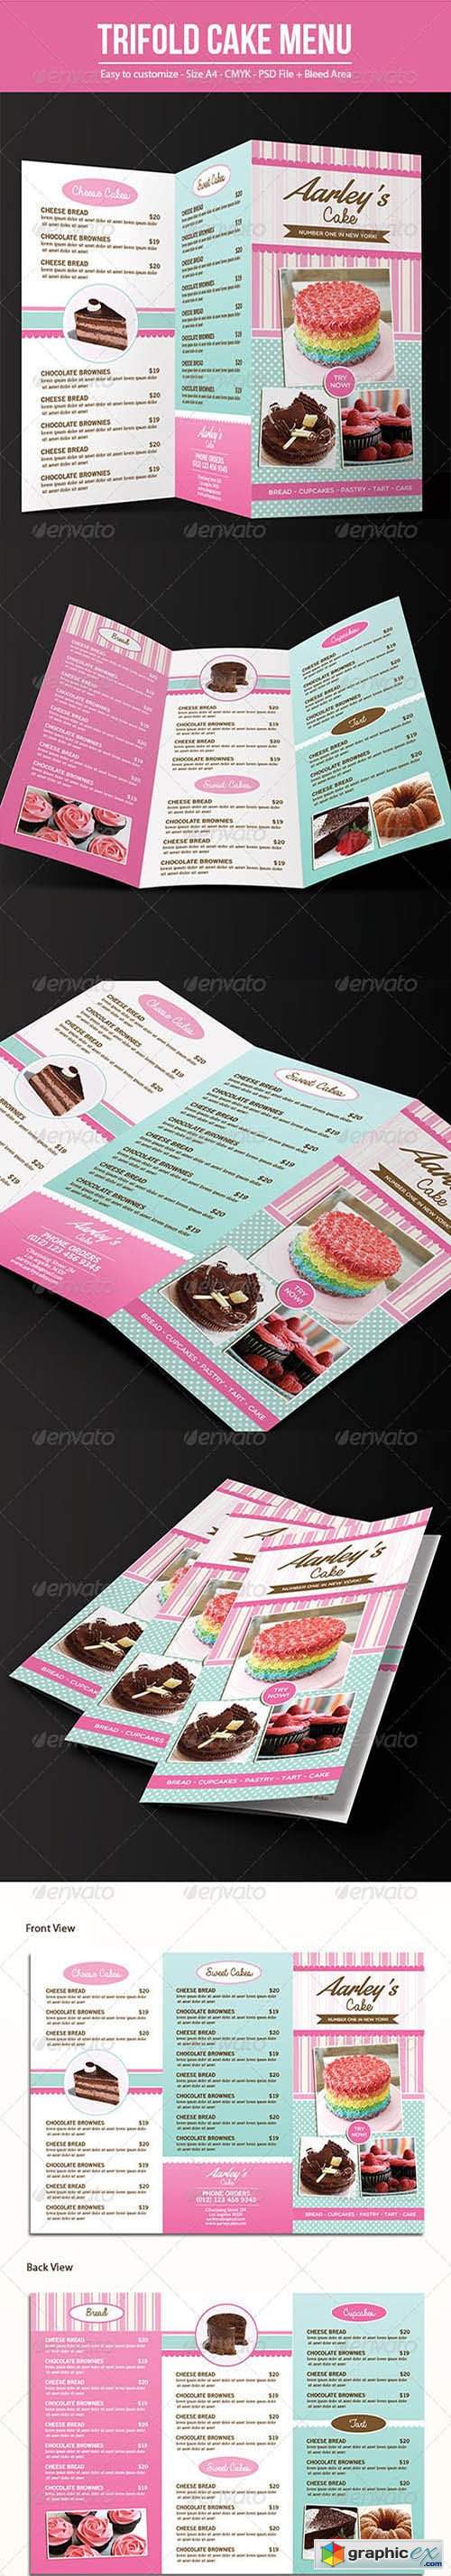 Trifold Cake Menu + Business Card